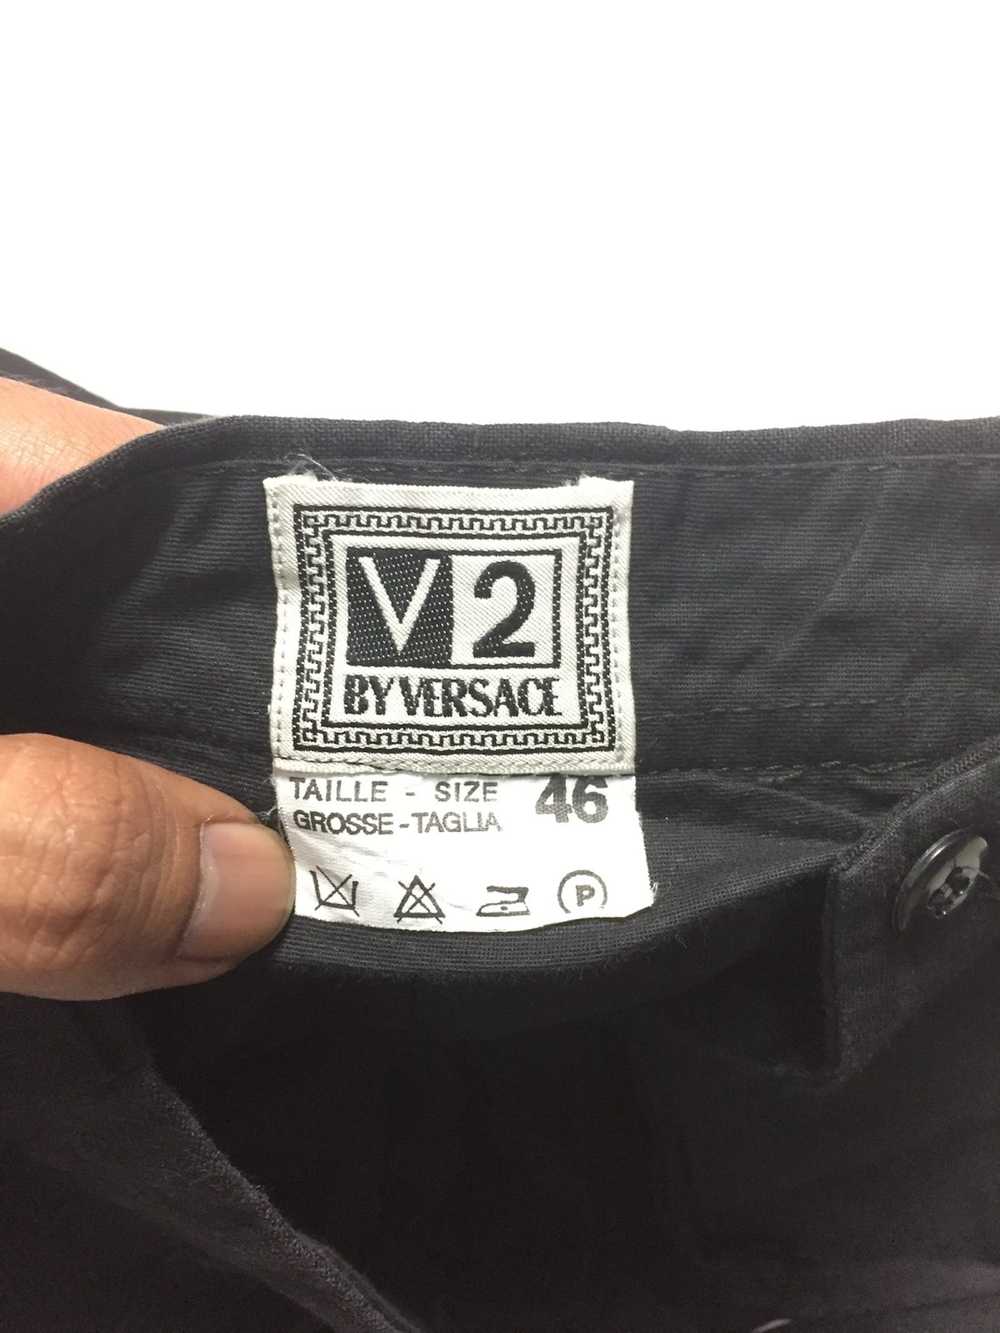 Versace Versace v2 linen slack pants waist 29 - image 4